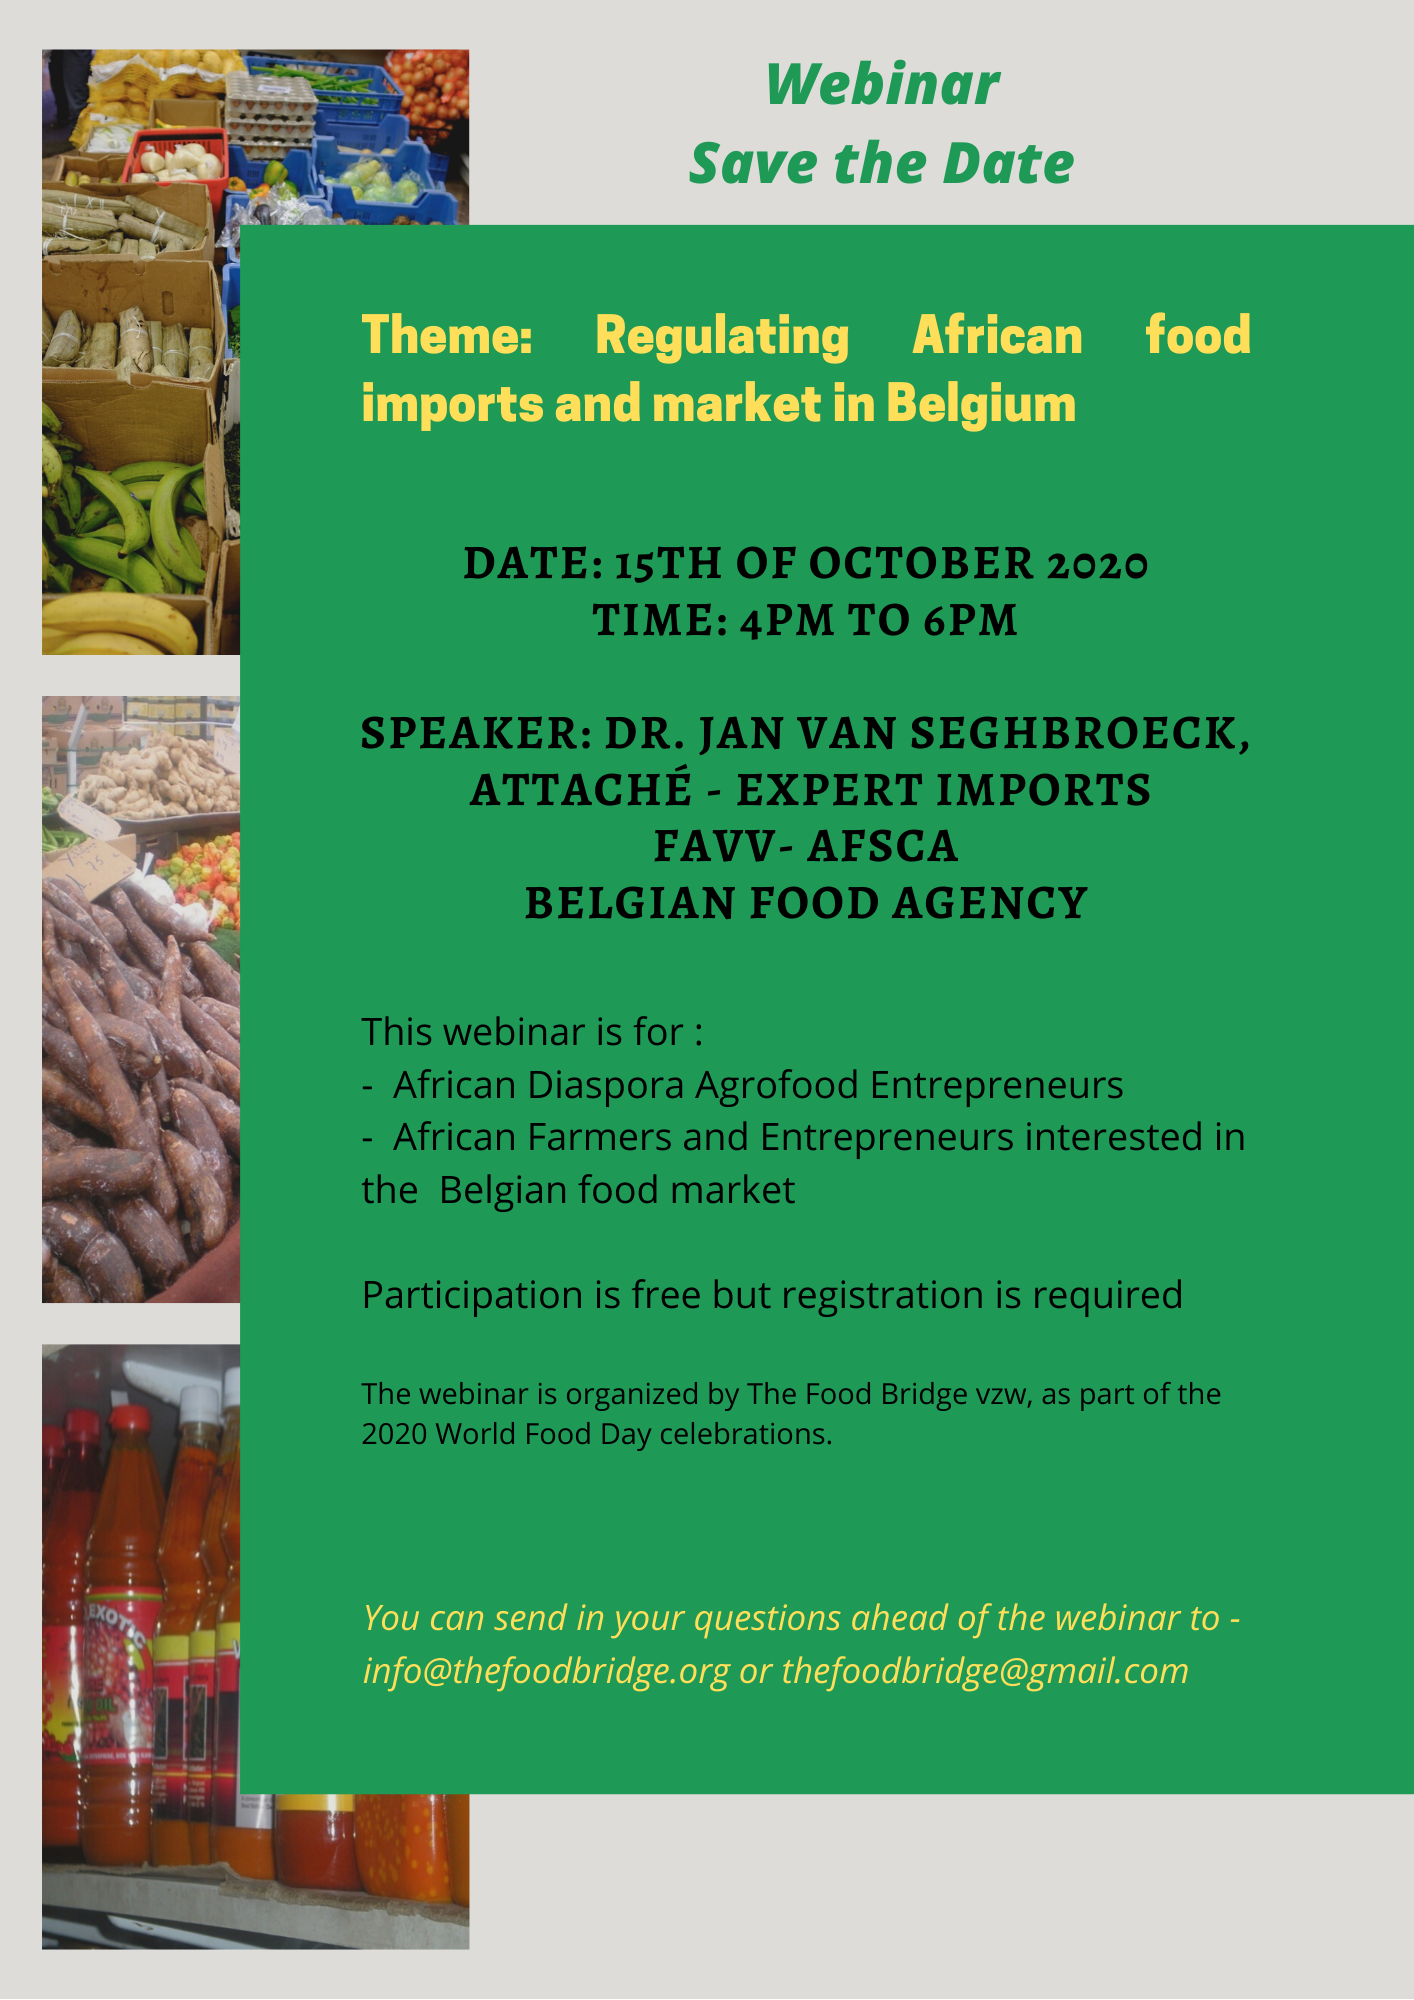 African food imports in Belgium